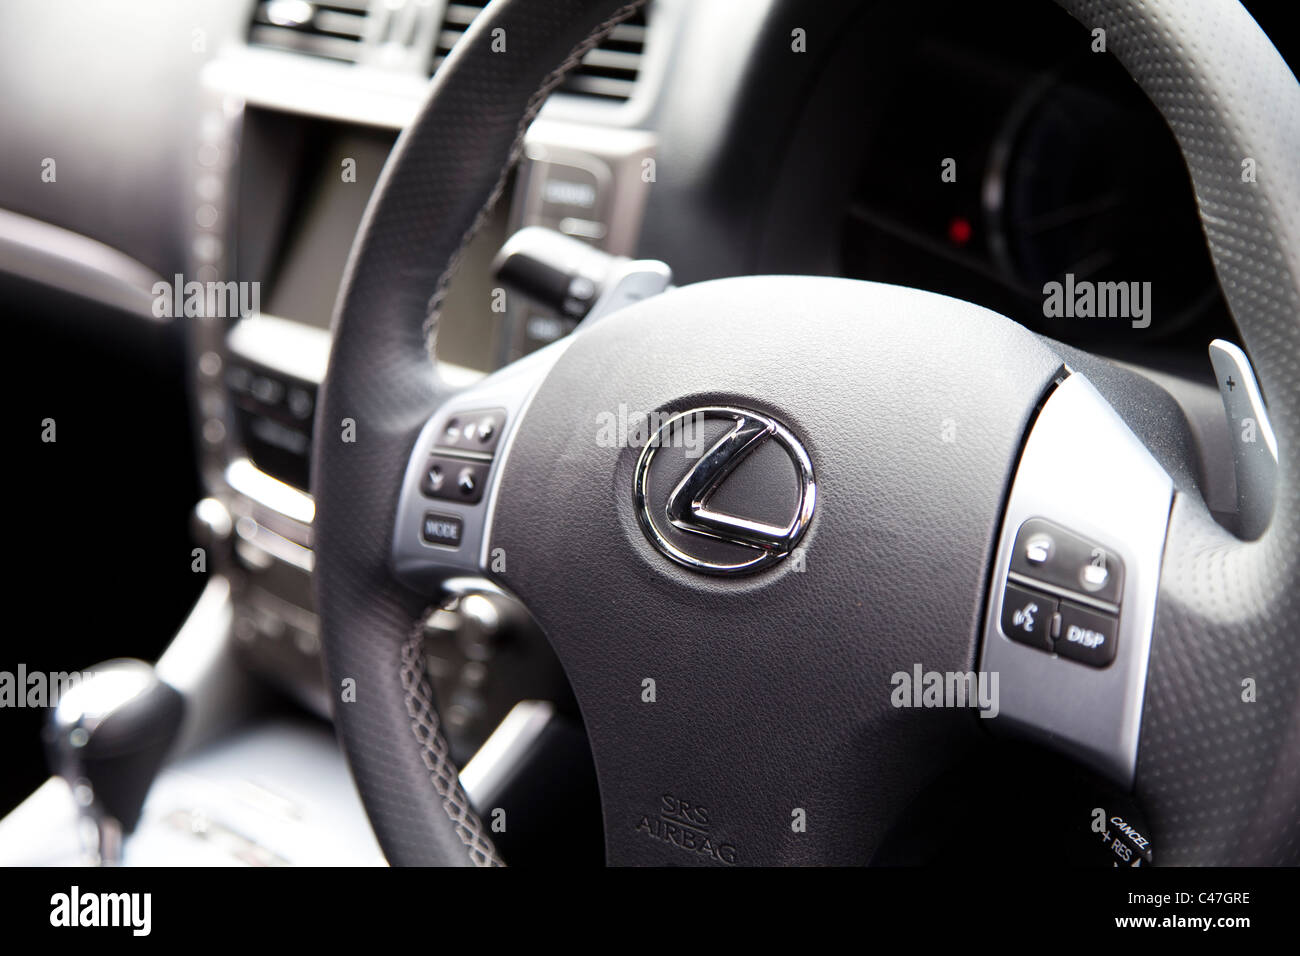 Lexus Car Interior Dashboard And Steering Wheel England Uk Stock